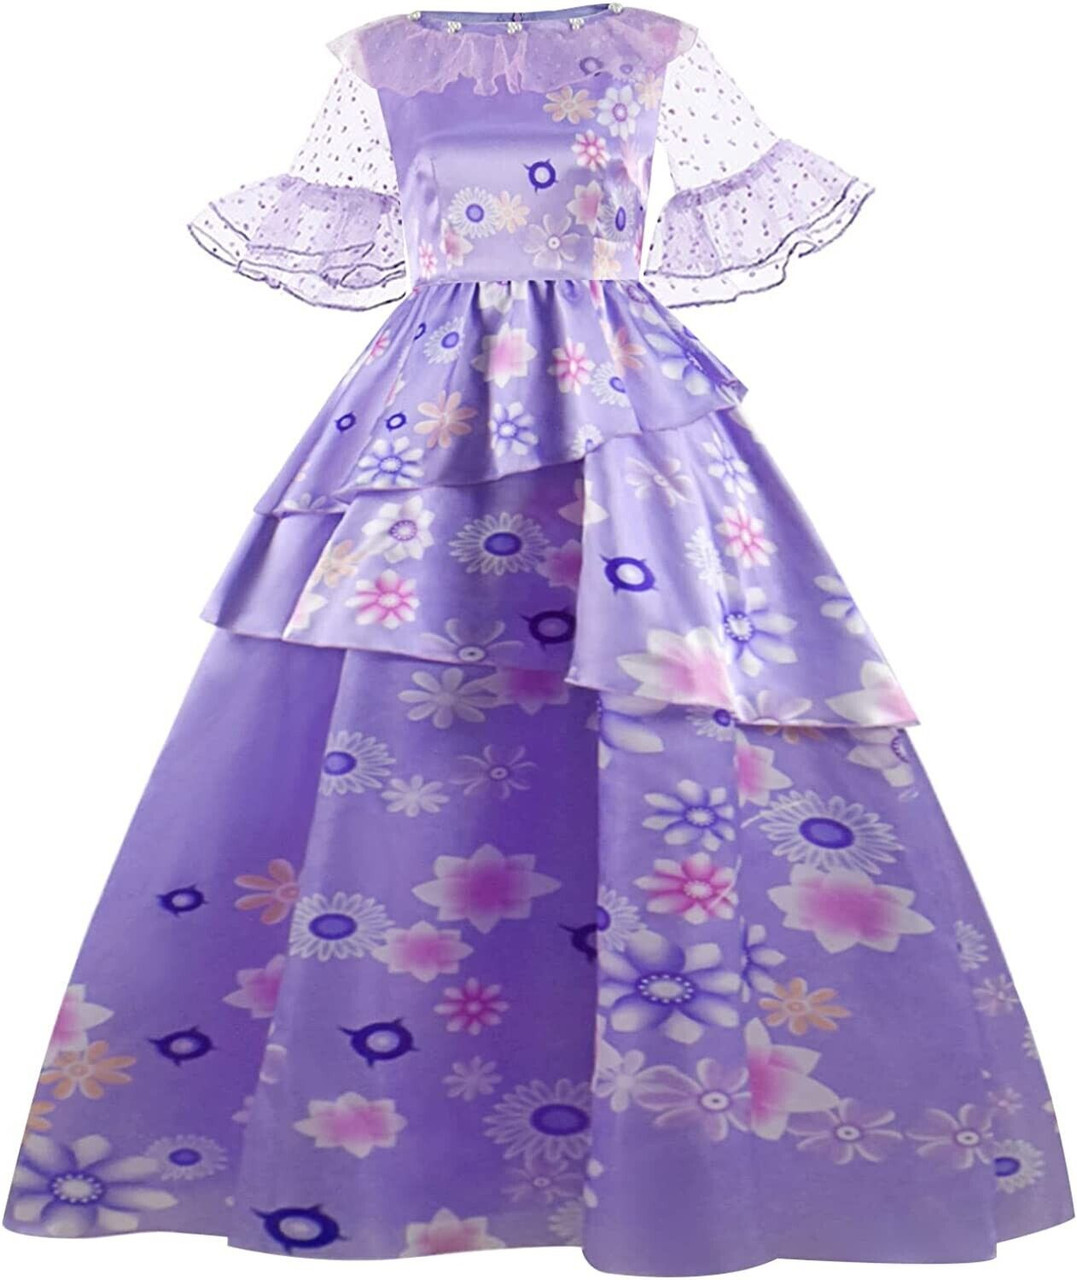 Disney Isabella Encanto Fille Robe Halloween Fantasia Fleur